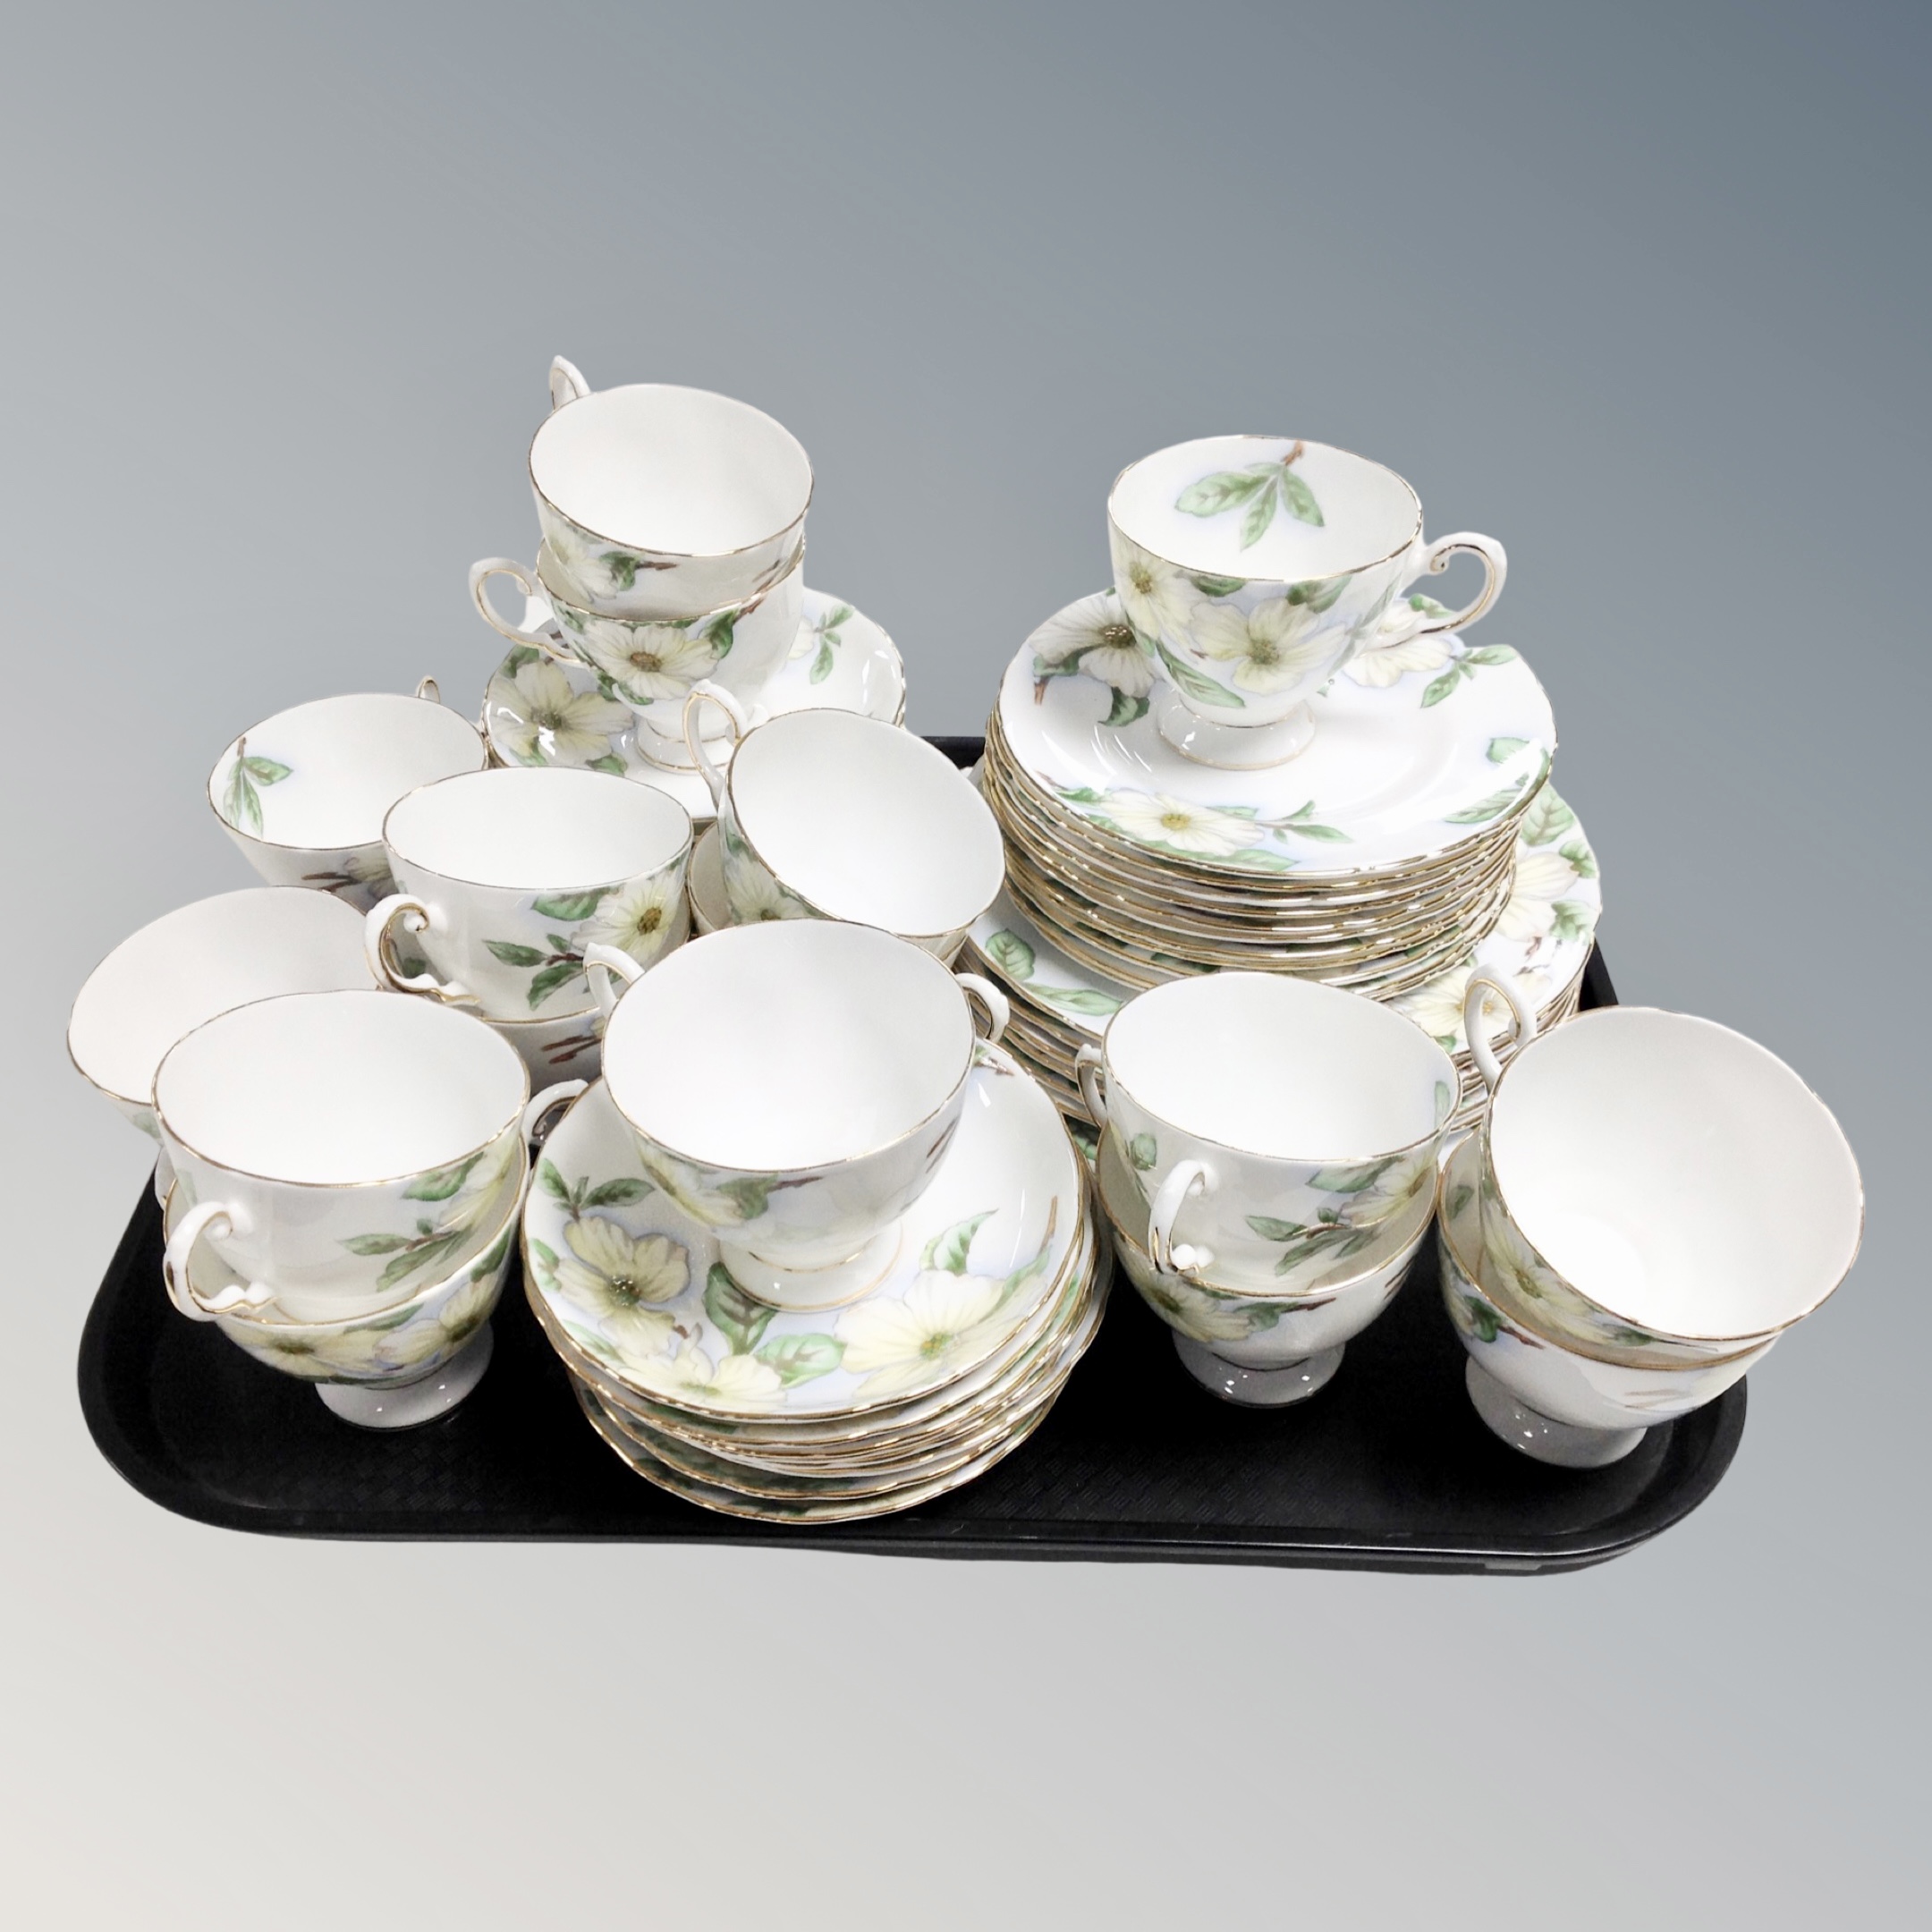 A tray of fifty pieces of Tuscan Dogwood bone tea china